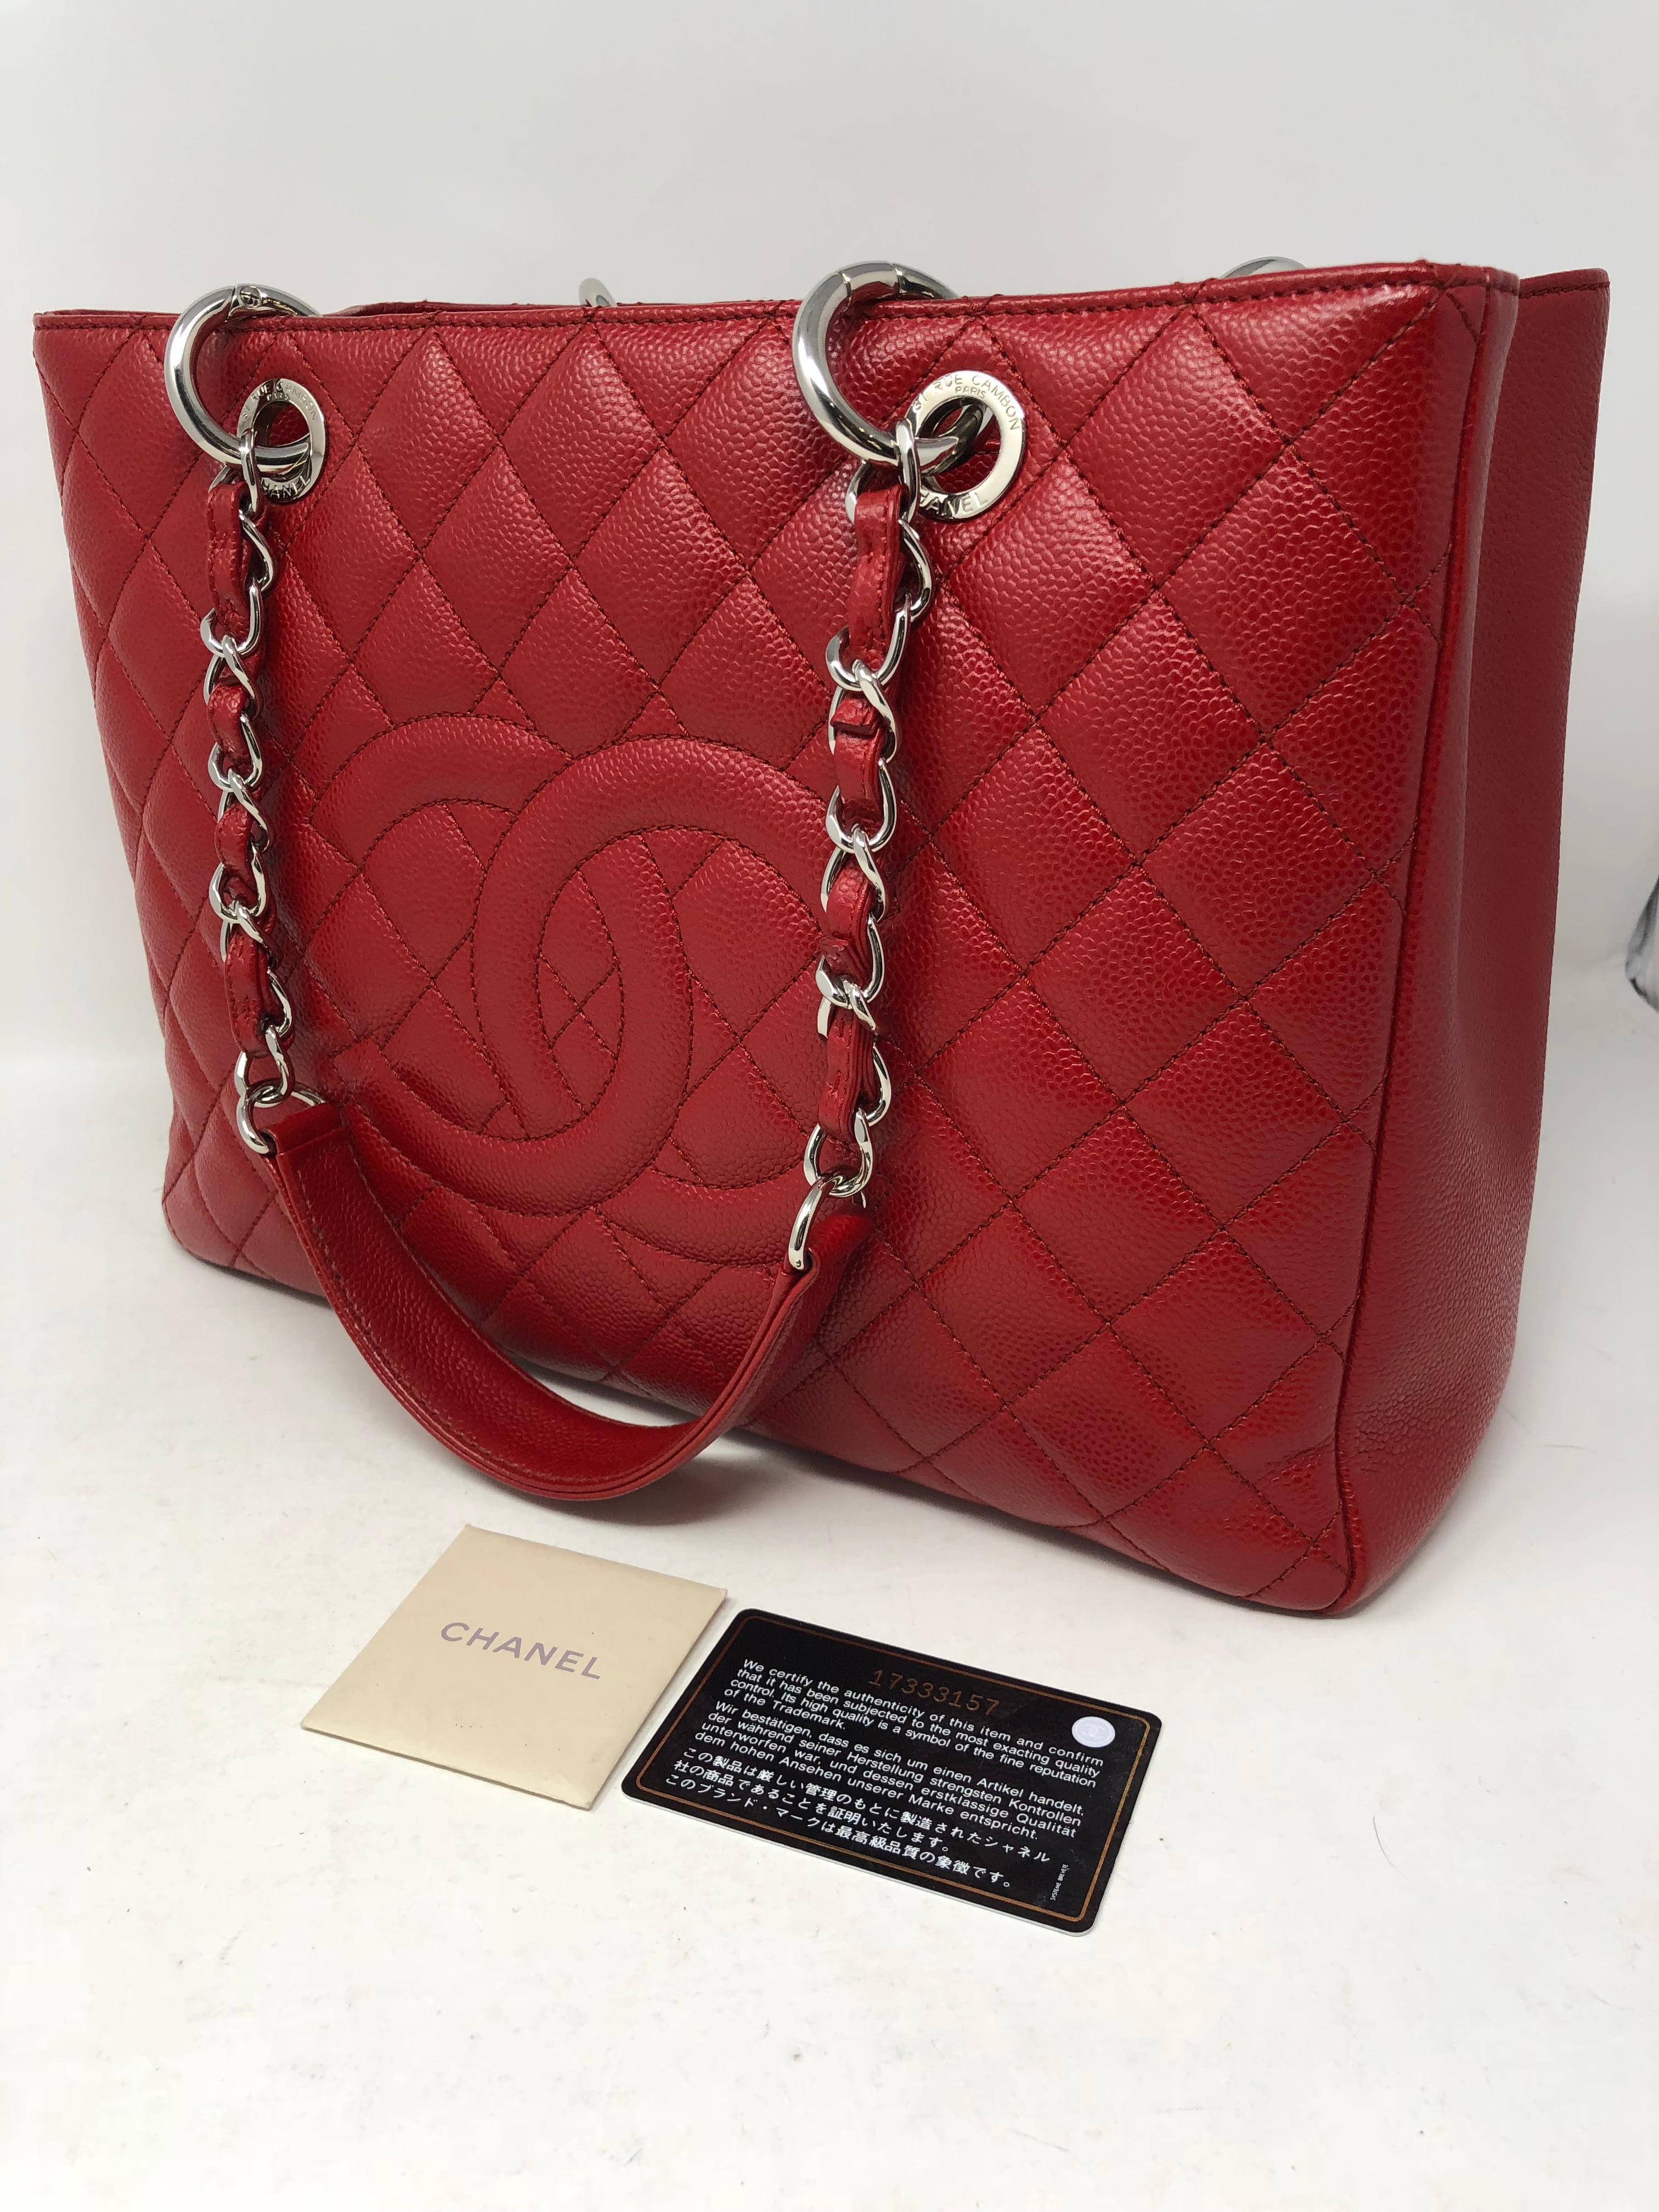 Chanel Red Grand Shopper Tote Bag 8